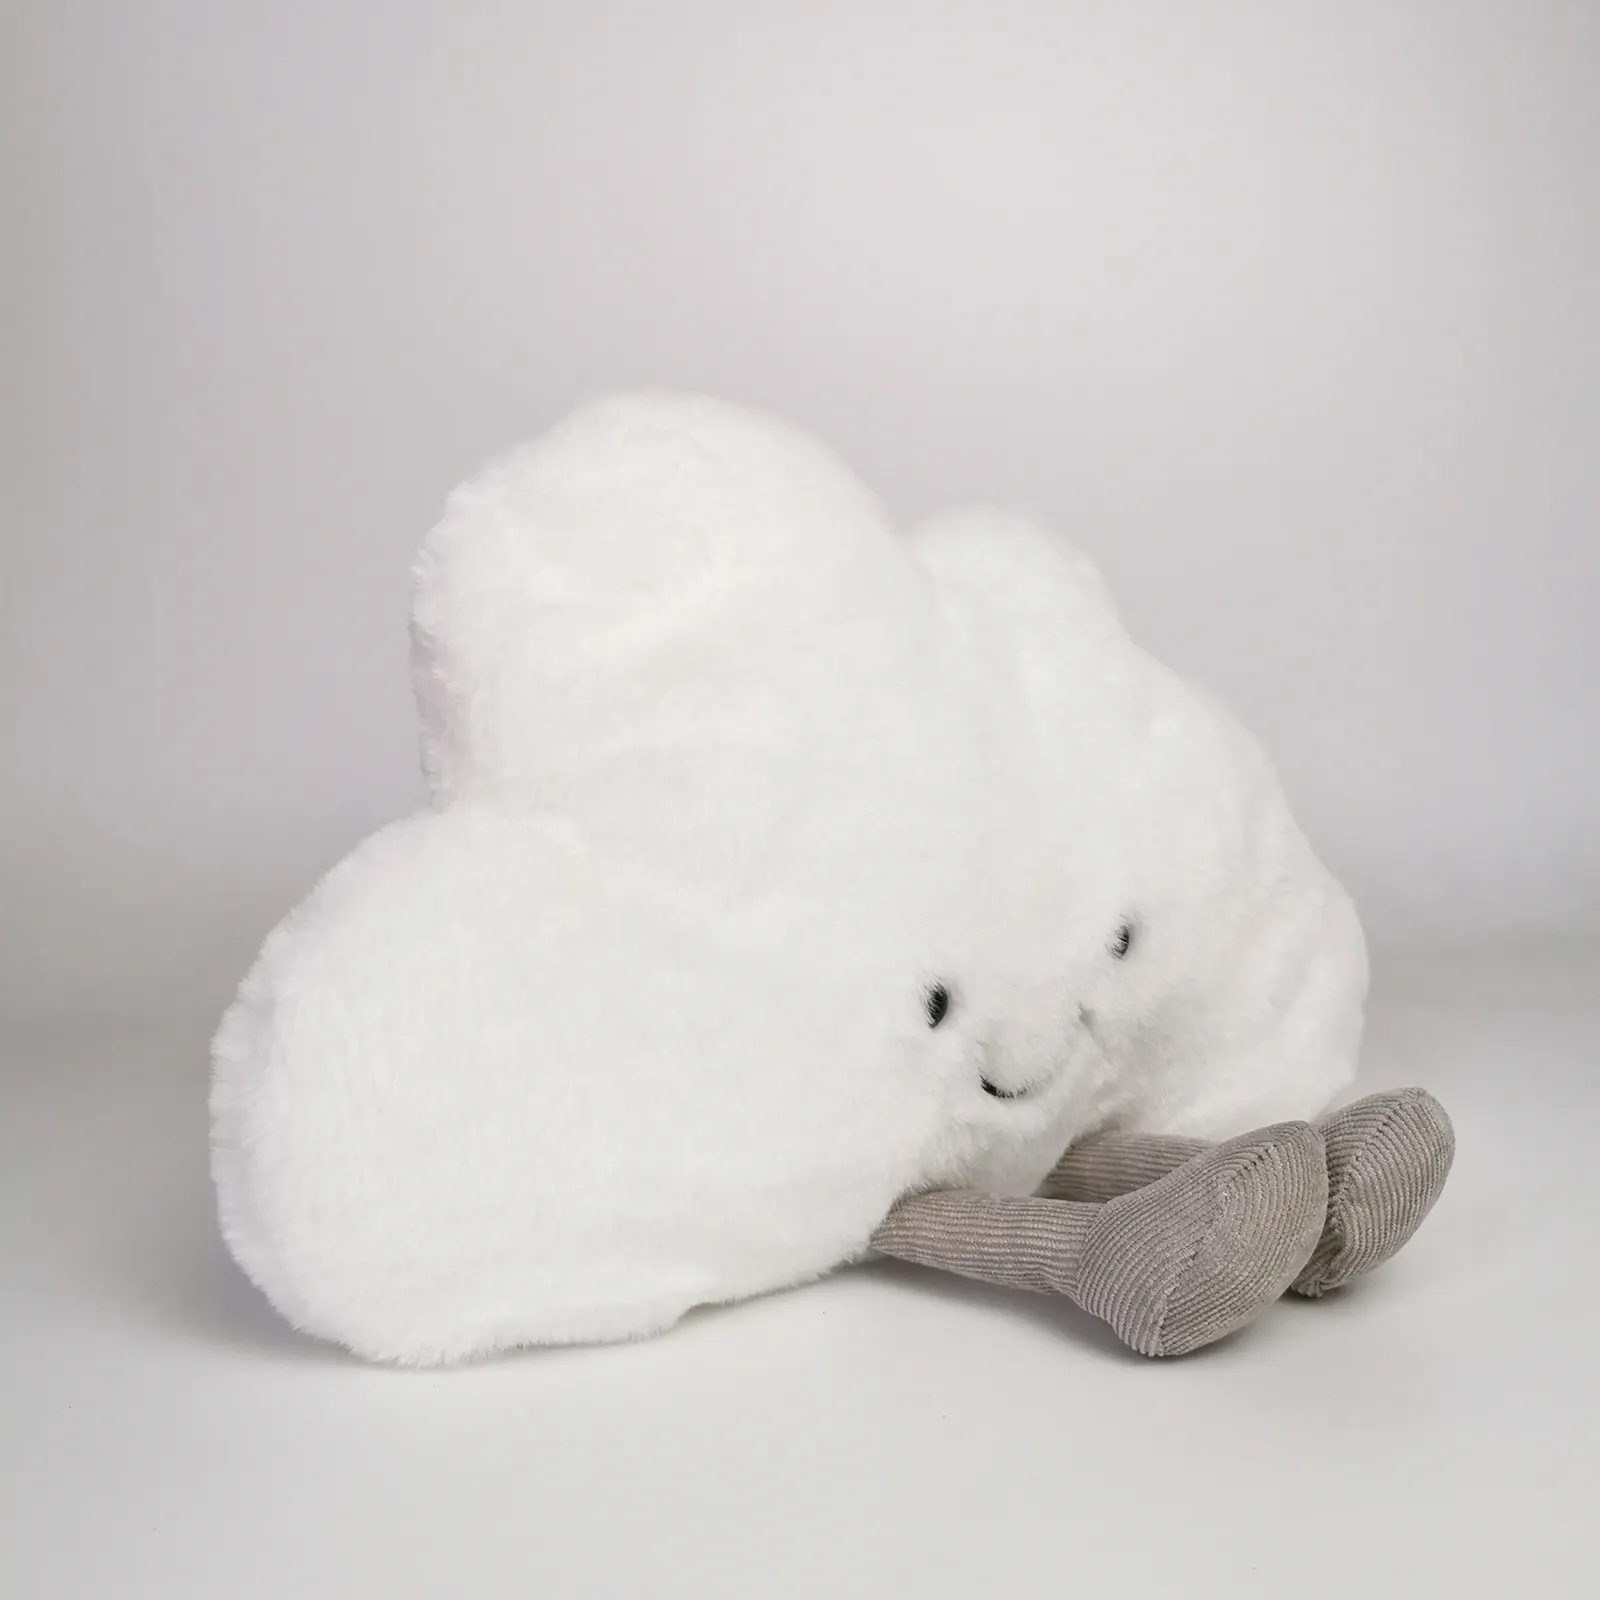 Mainan Awan Mewah Promosi Khusus Boneka Lucu Boneka Awan Putih Bantal Mainan Pabrik Boneka Dokter Beruang Mewah